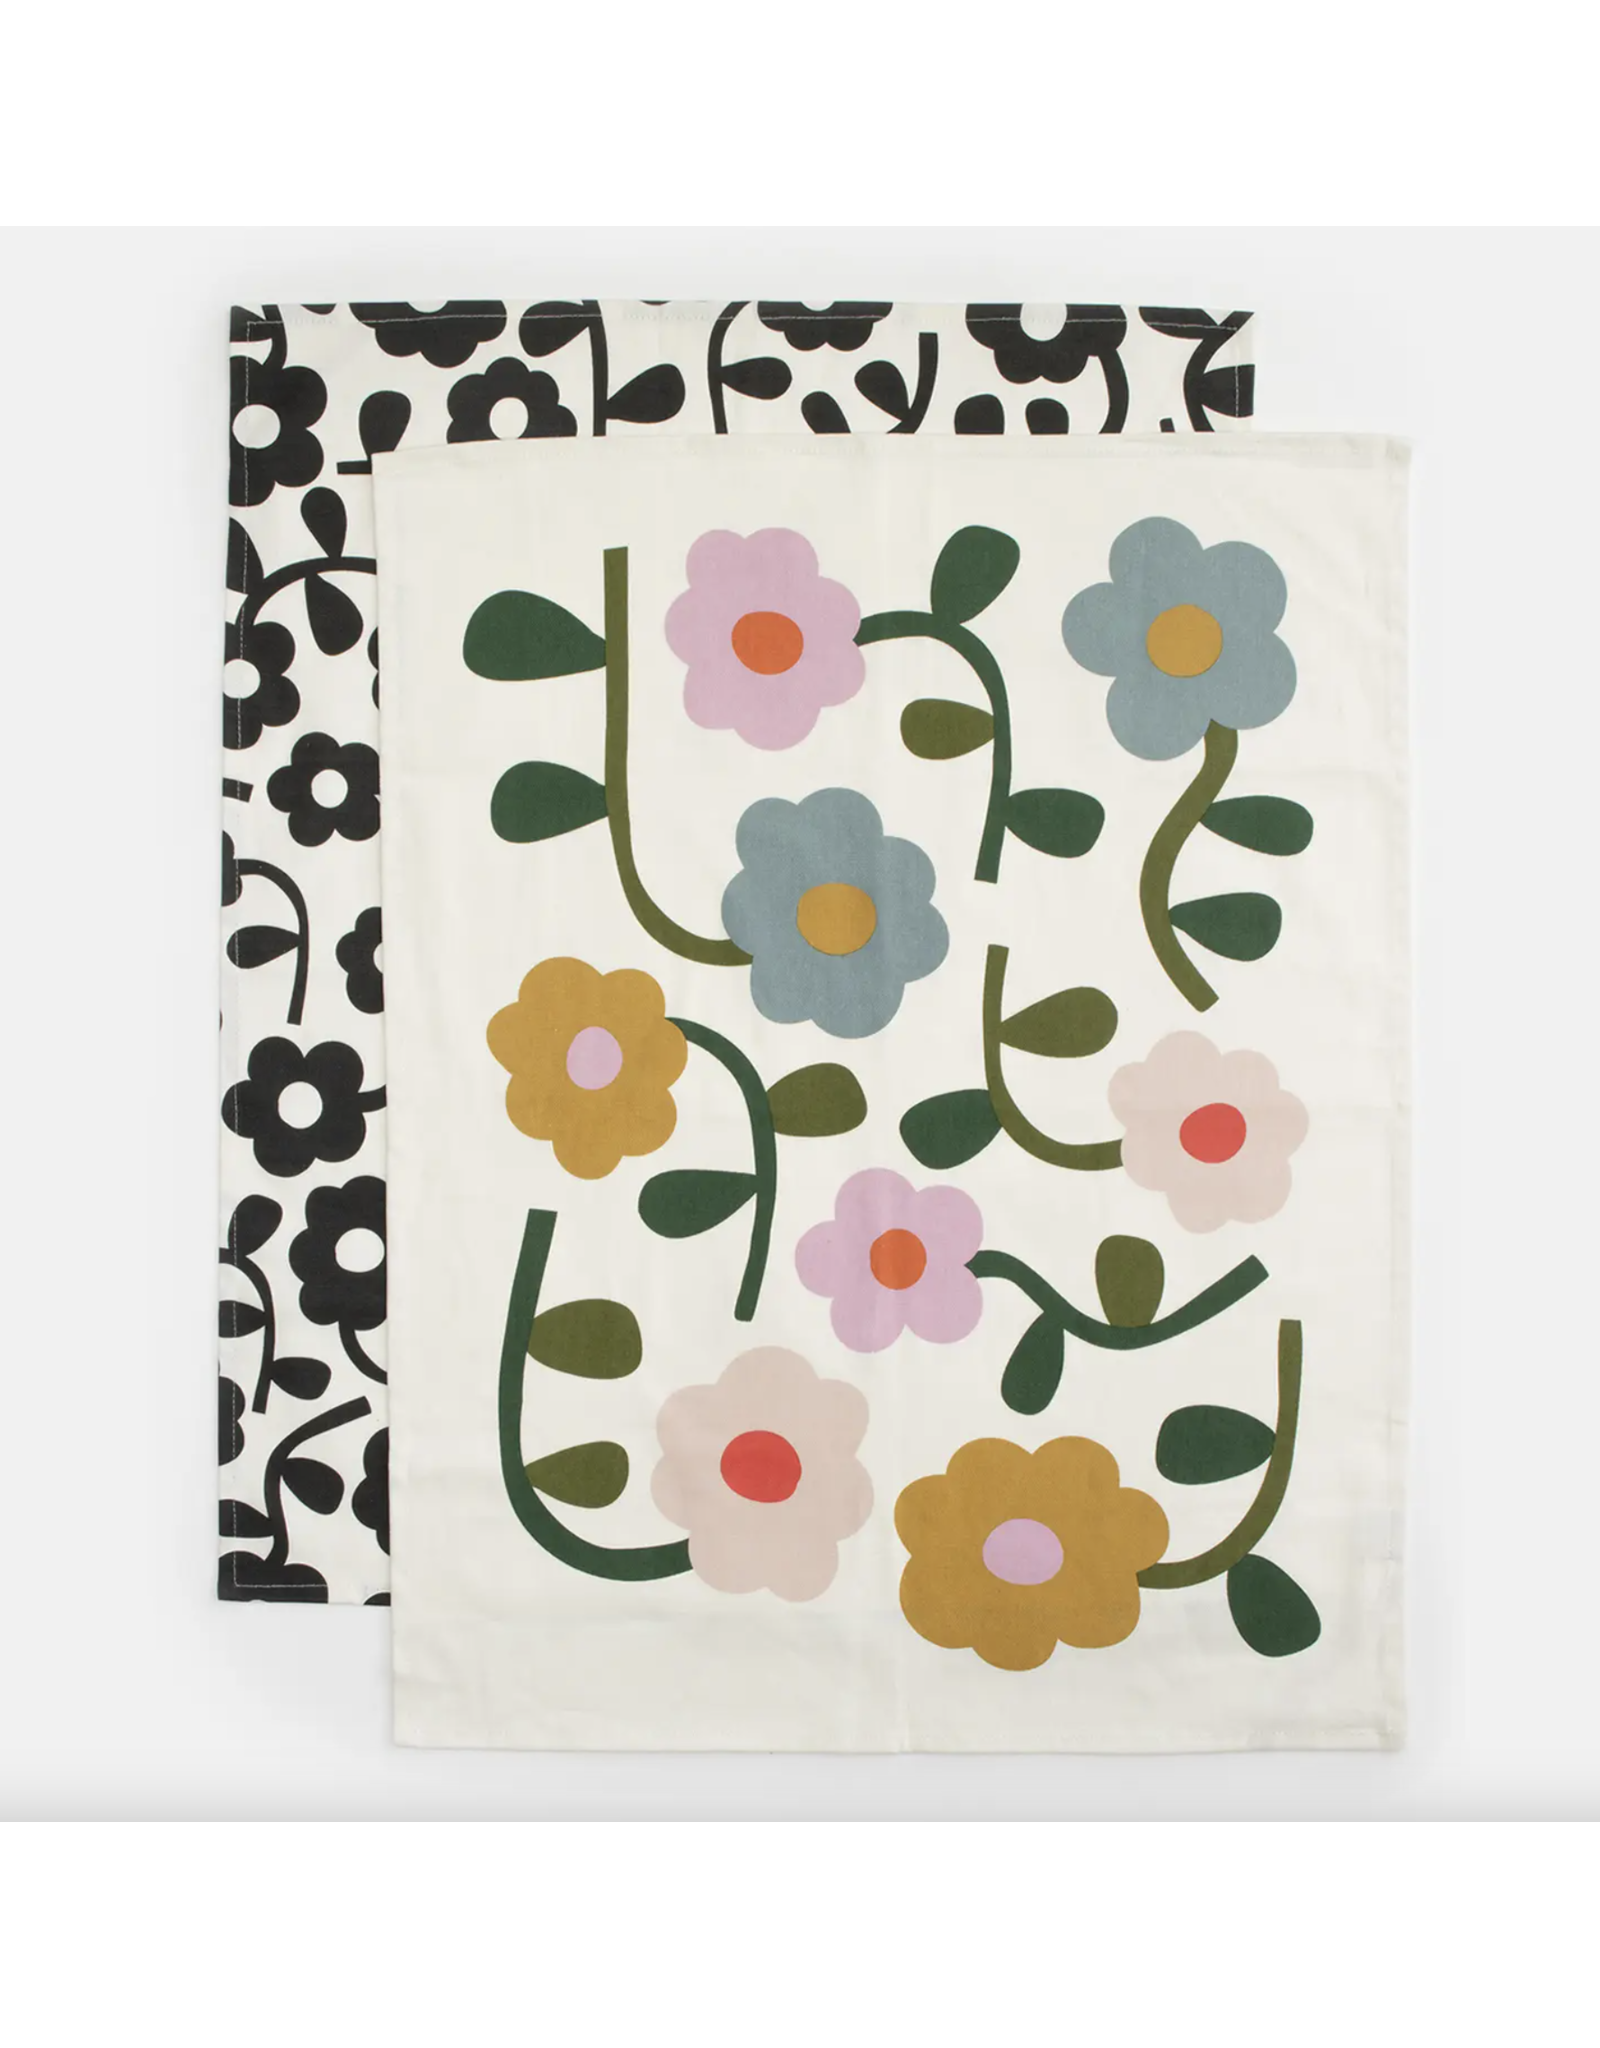 Caroline Gardner Multi/Mono Floral Set of 2 Tea Towels